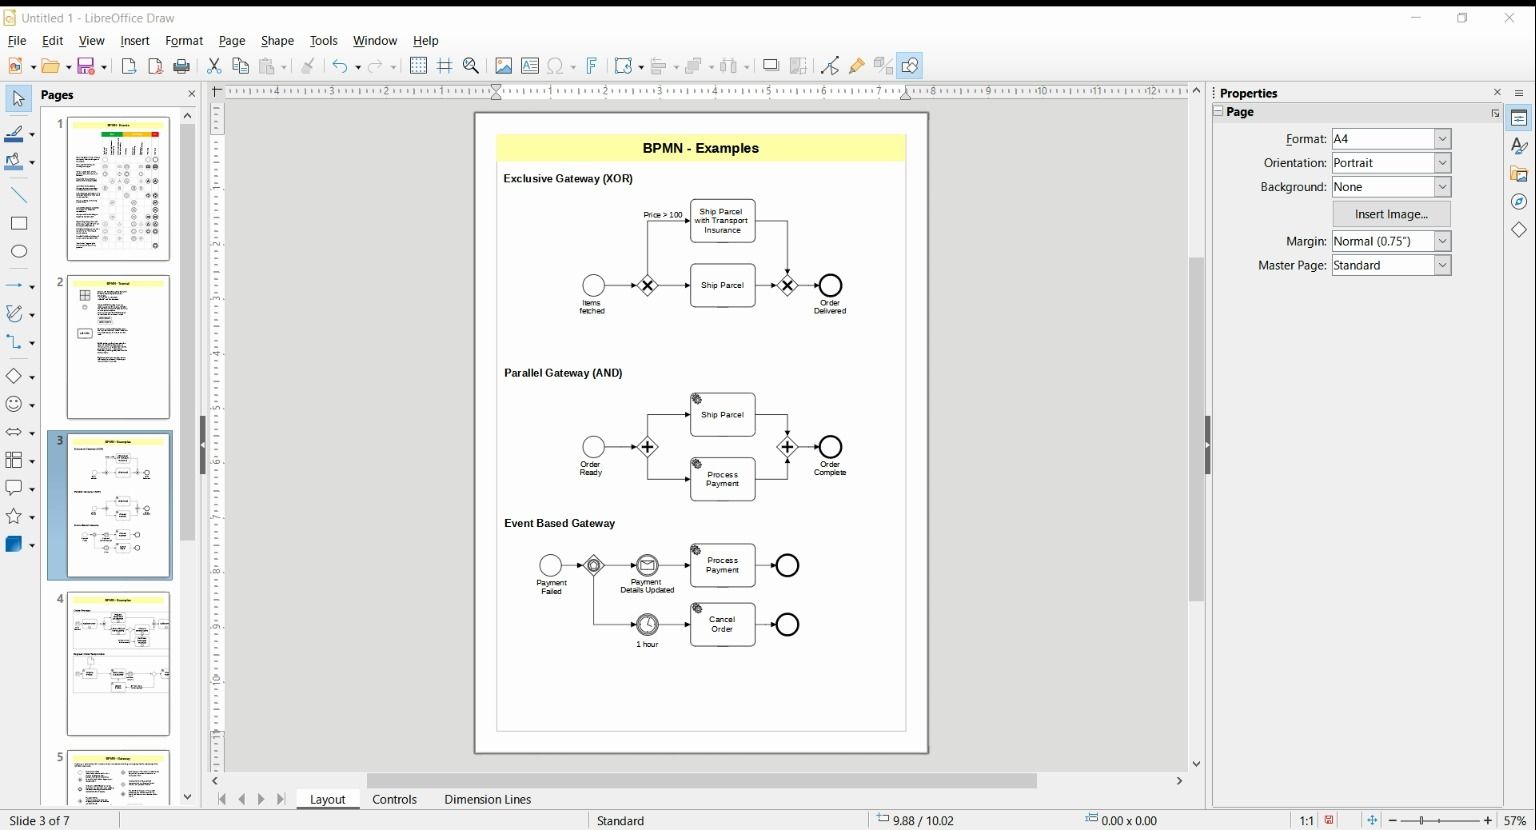 LibreOffice Draw BPMN examples